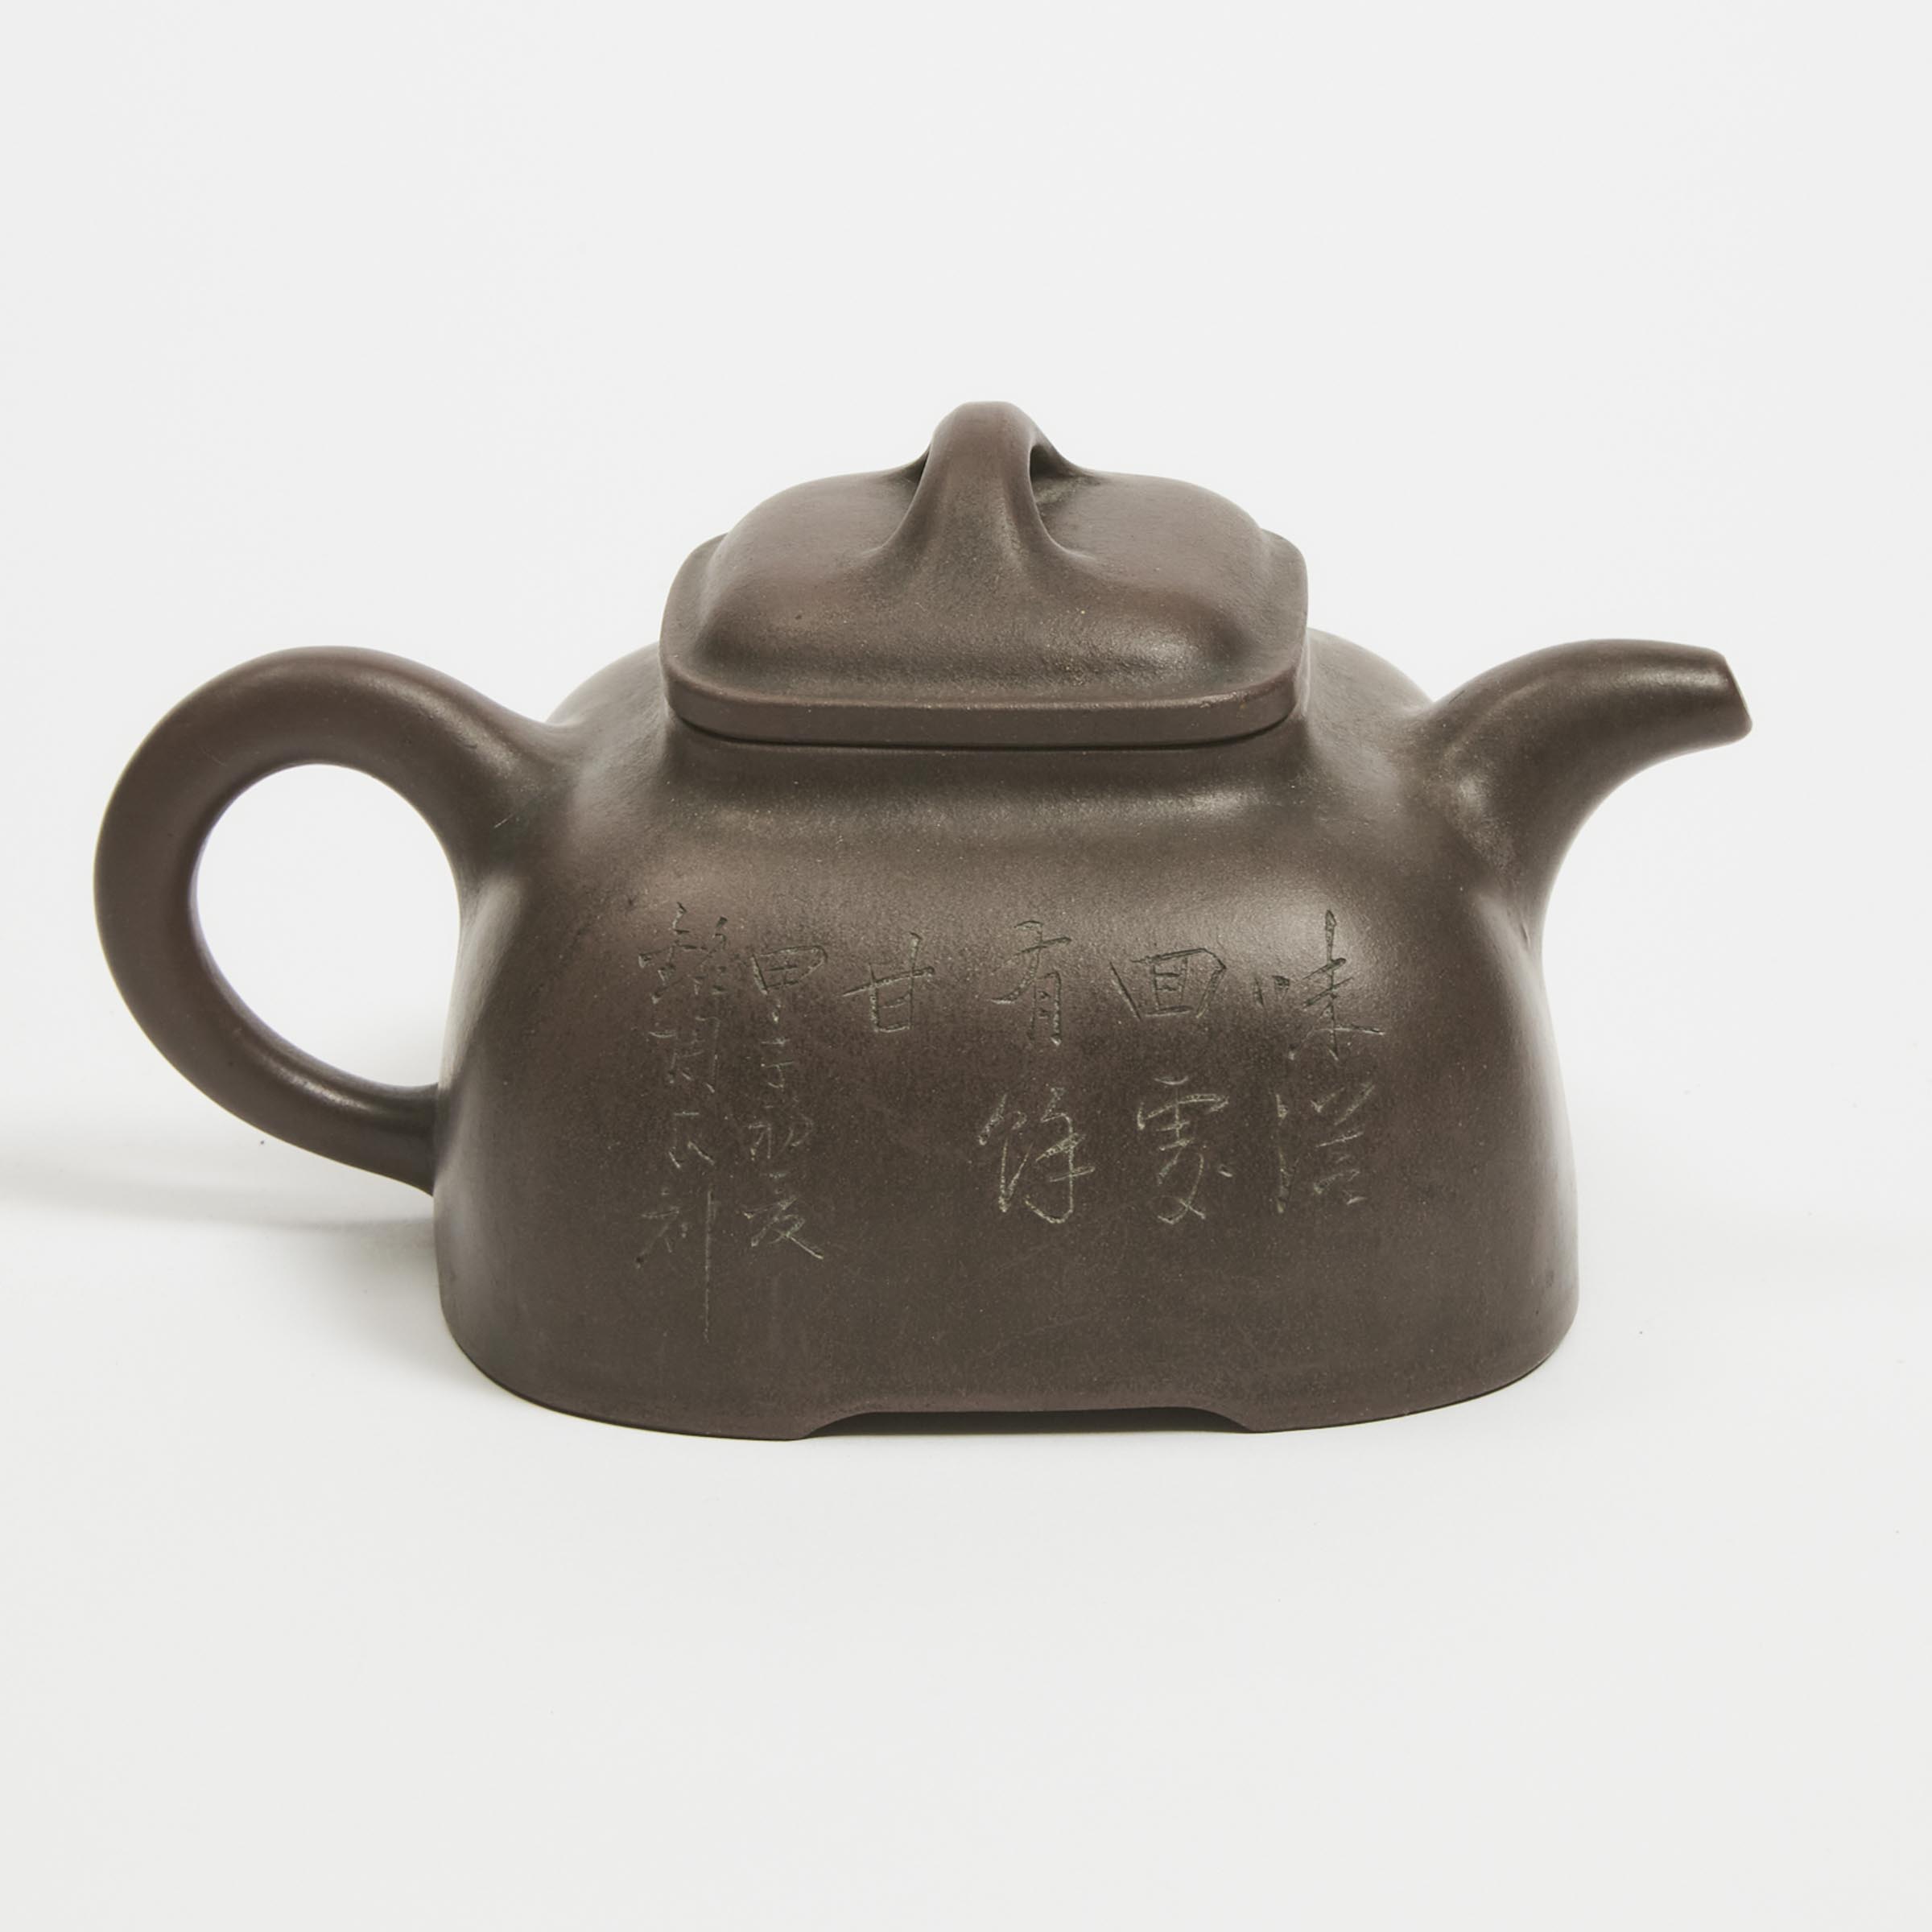 A Yixing/Zisha Square Teapot, Republican Period, Early 20th Century